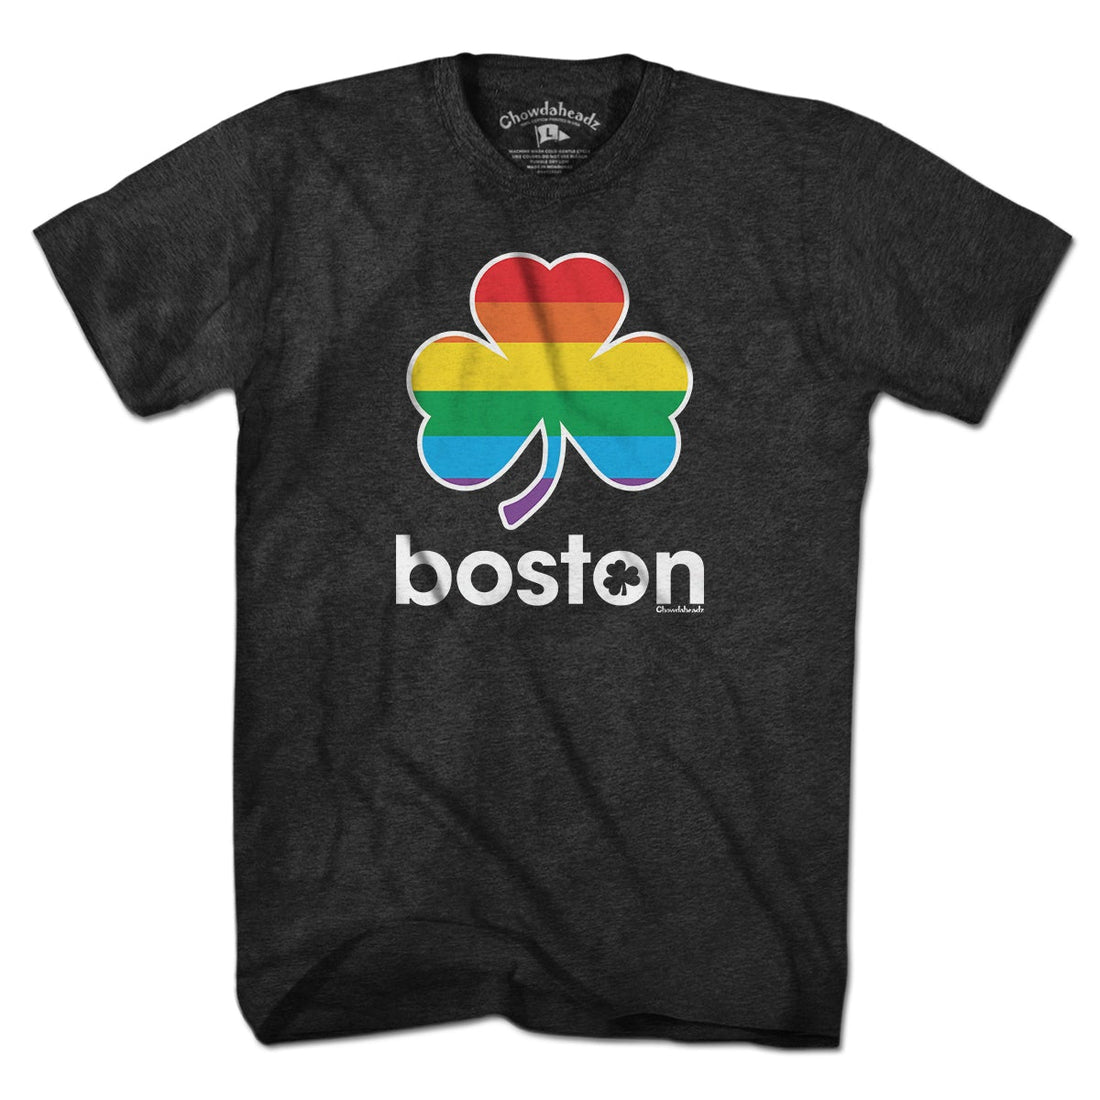 Boston Proud Irish T-Shirt - Chowdaheadz